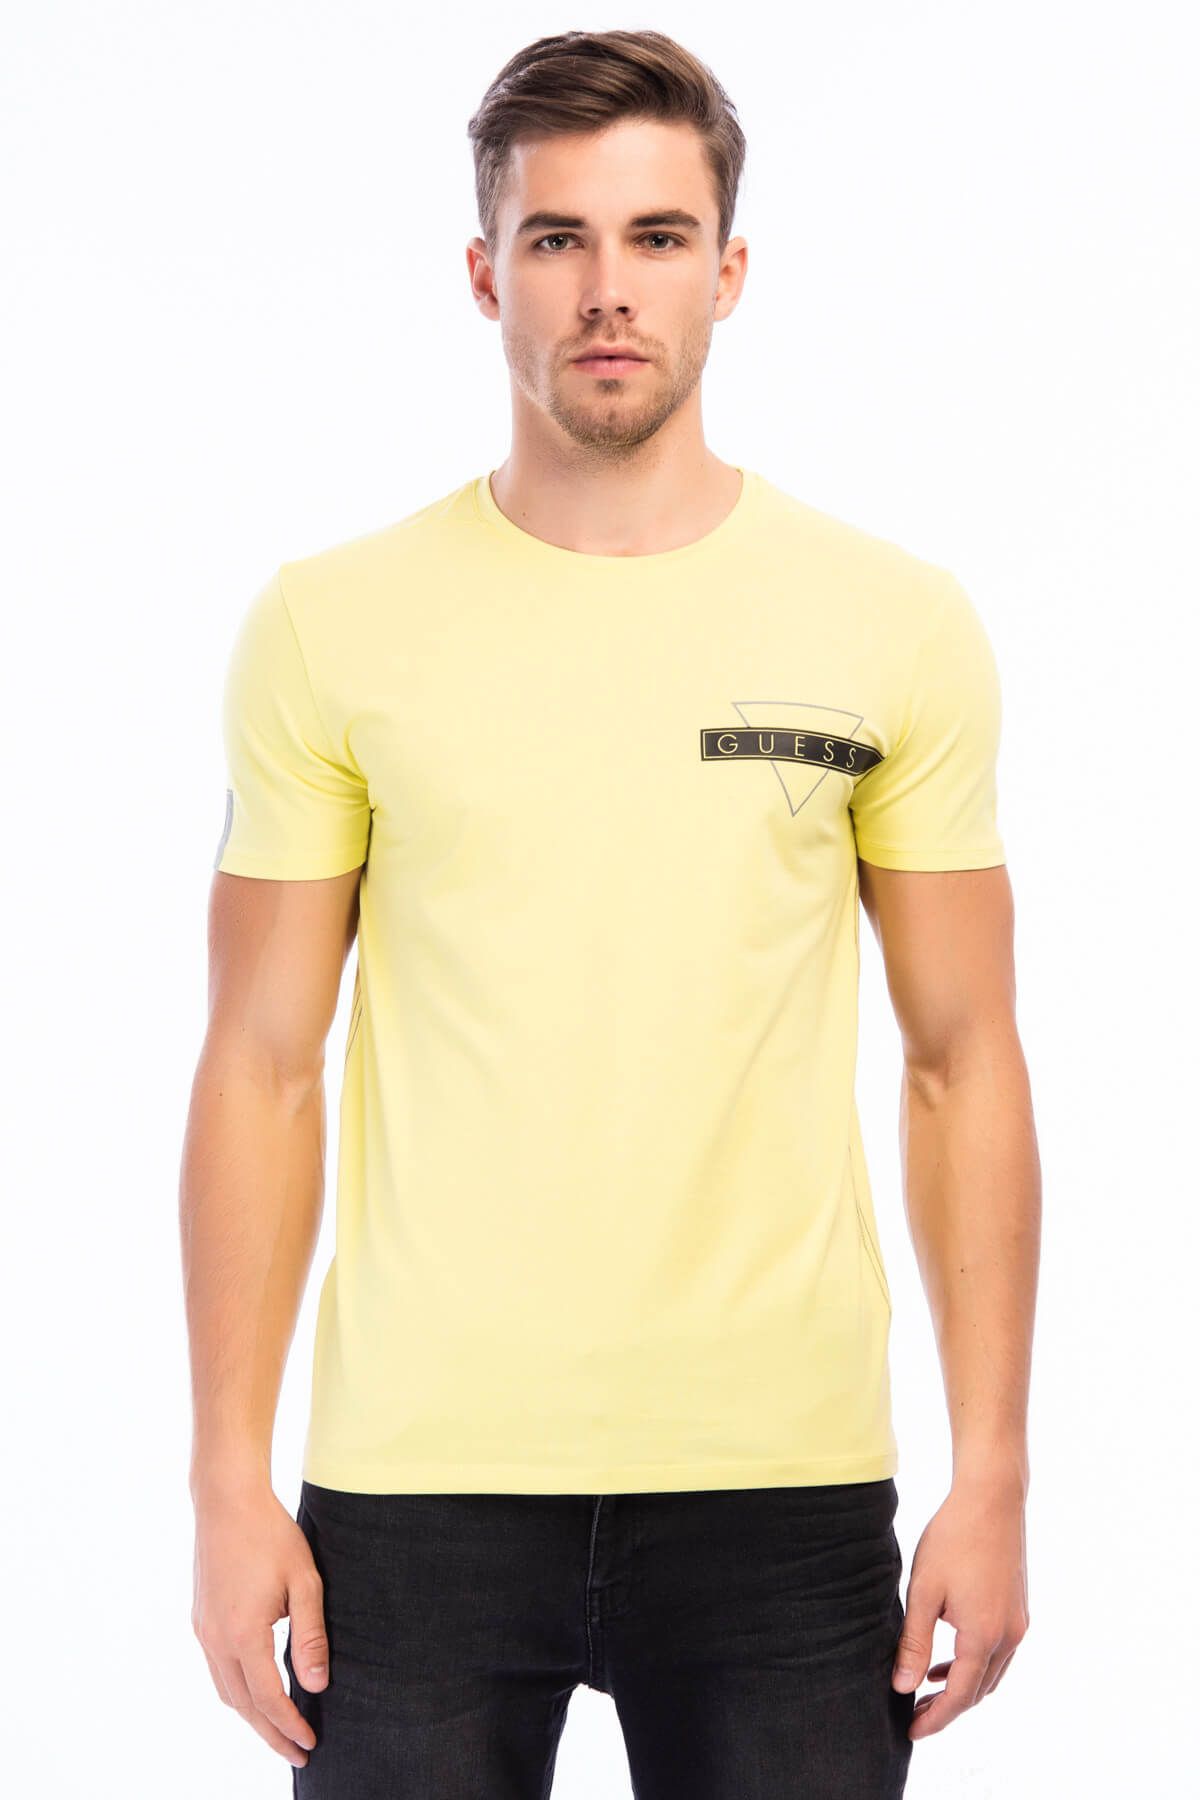 Guess Erkek Sarı T-Shirt M64I25J1300